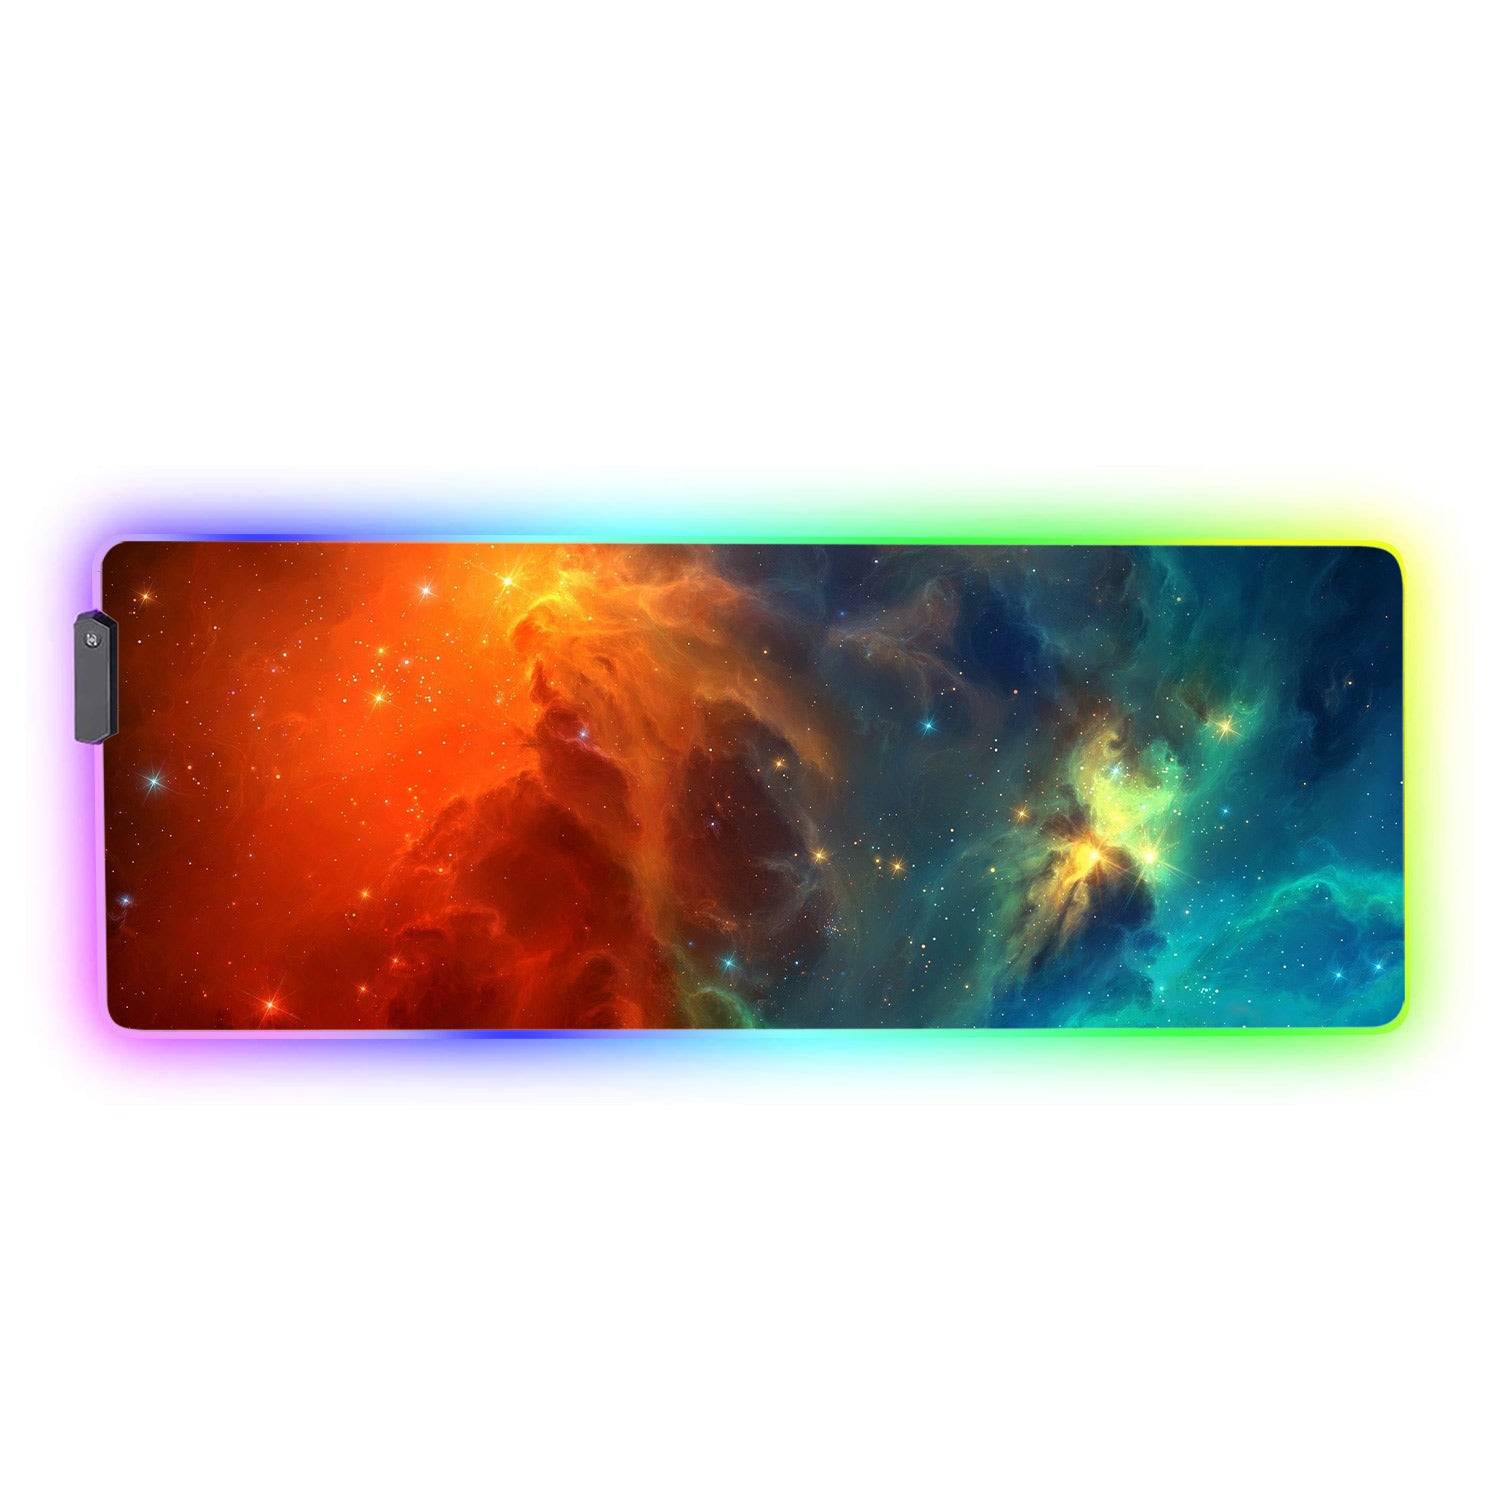 Nebula Space RGB Gaming Mouse Pad